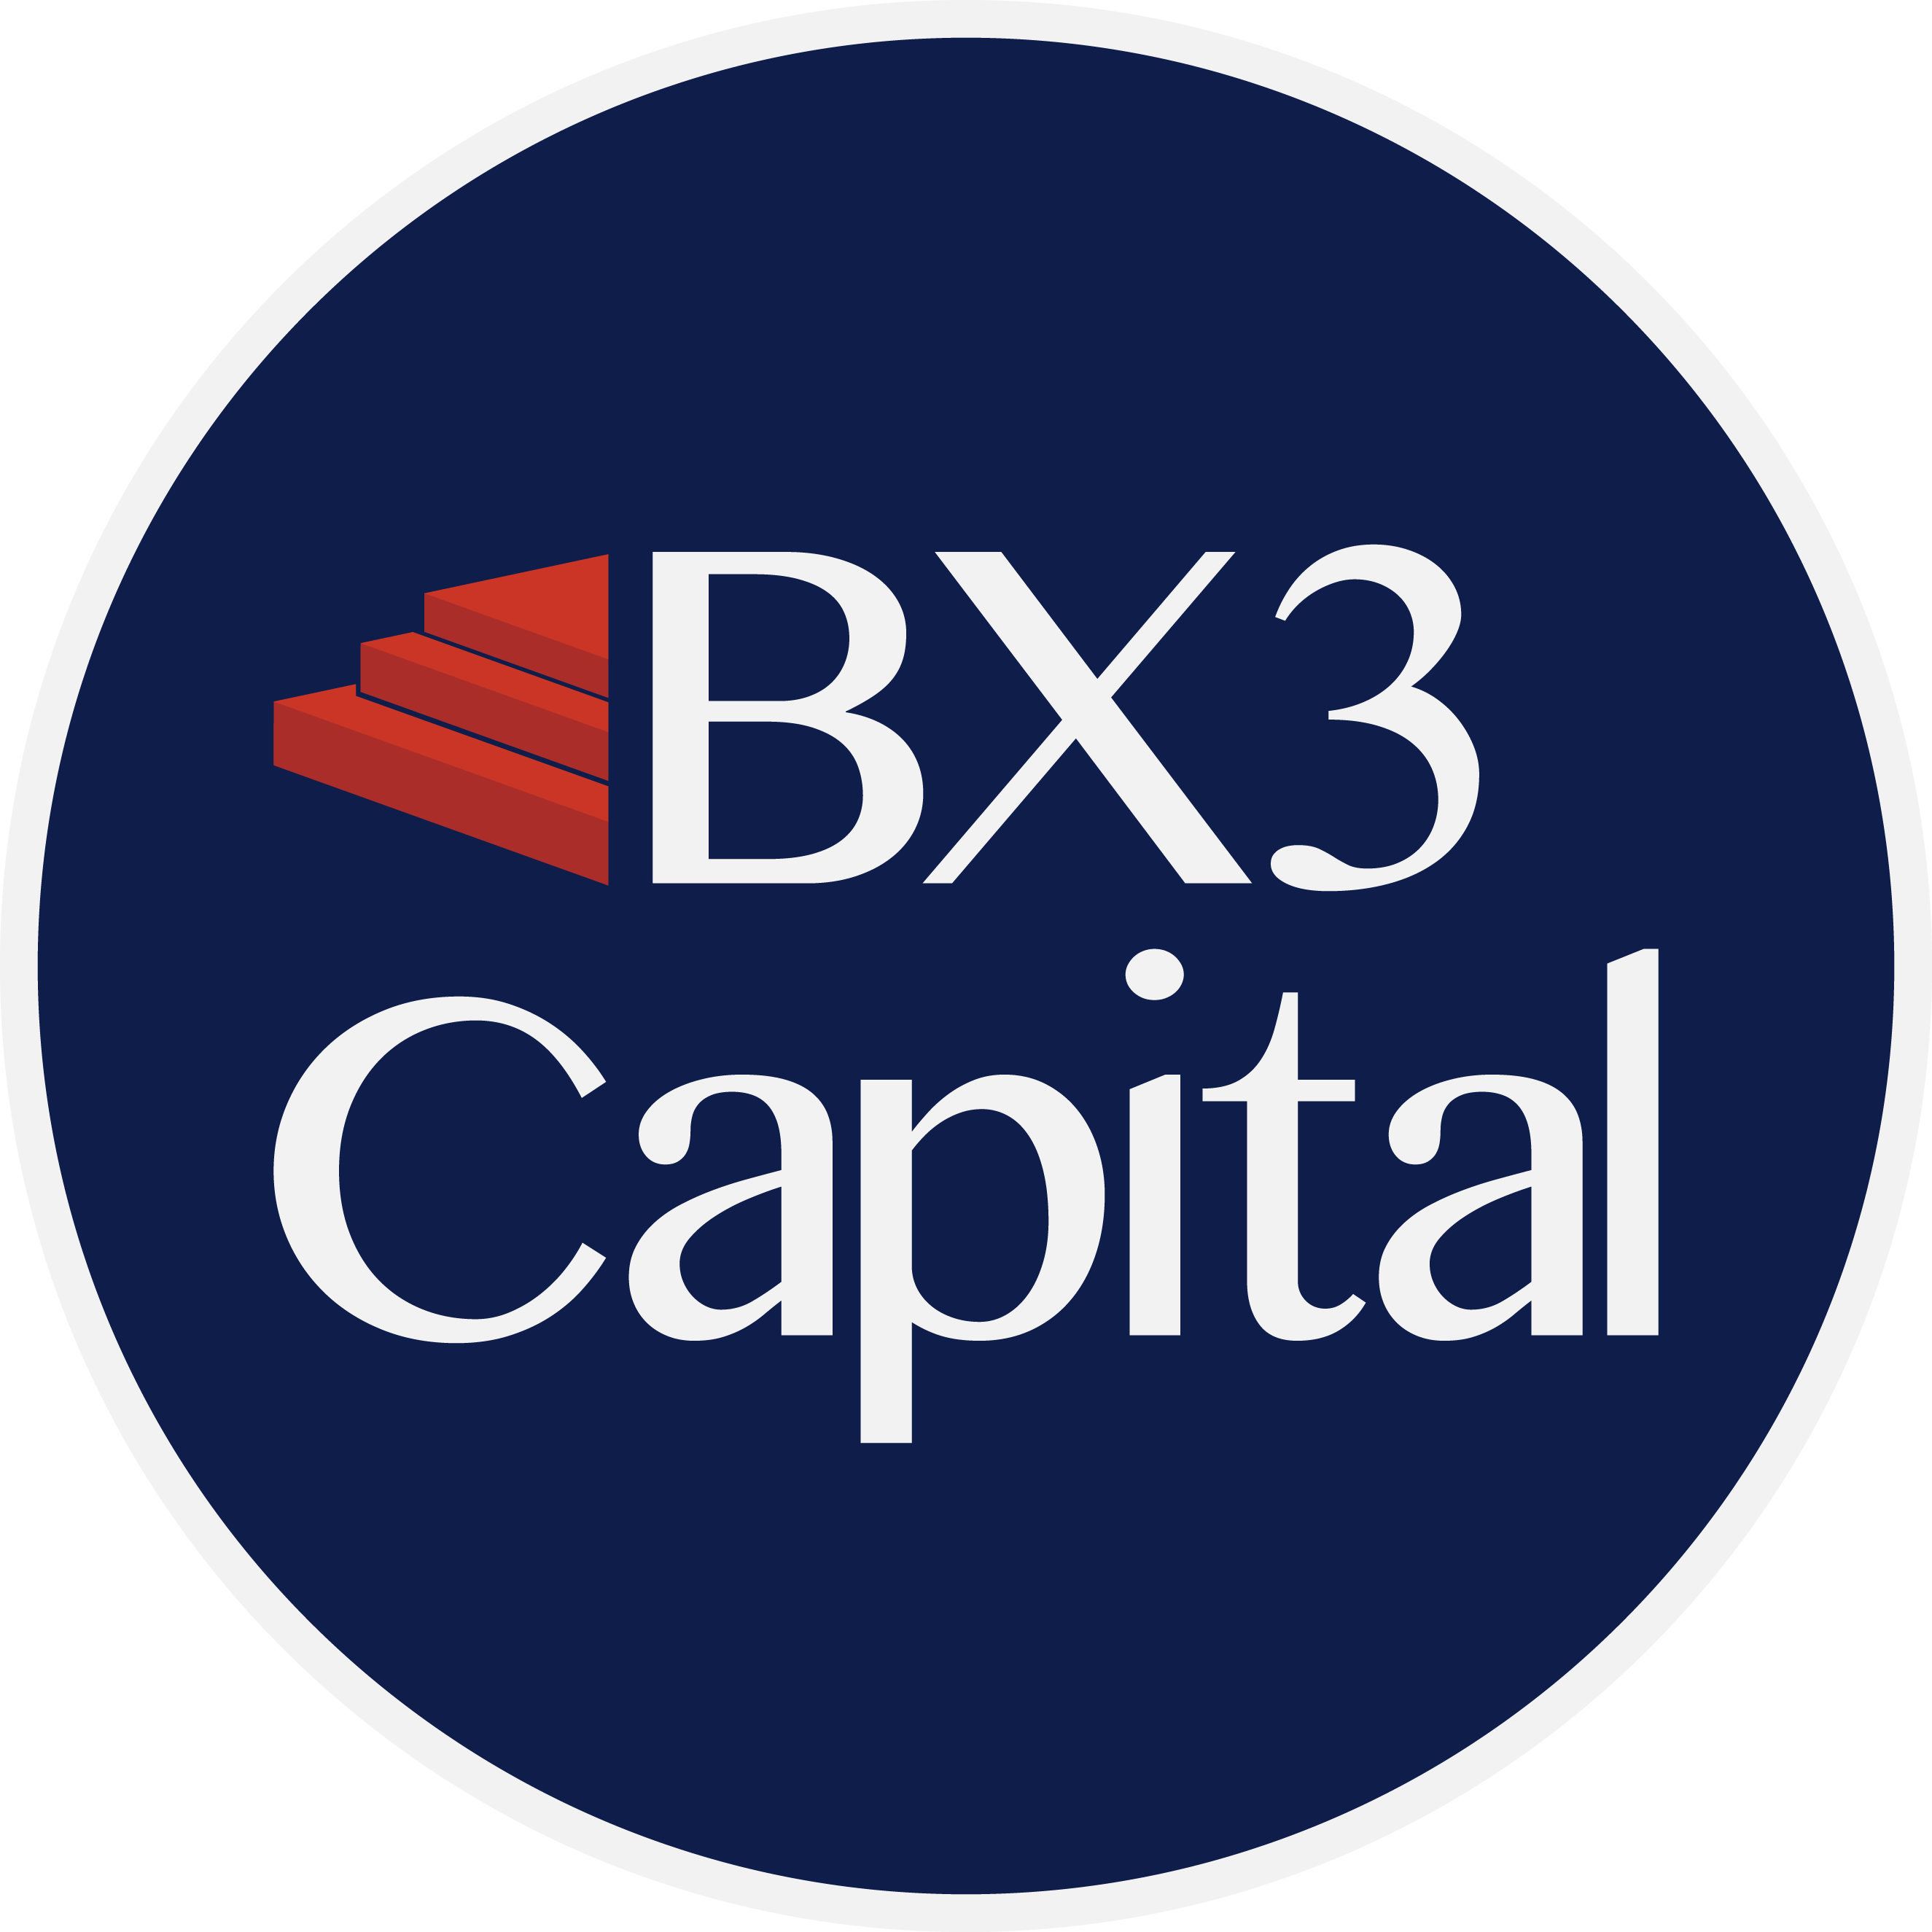 BX3 Capital Joins Gl